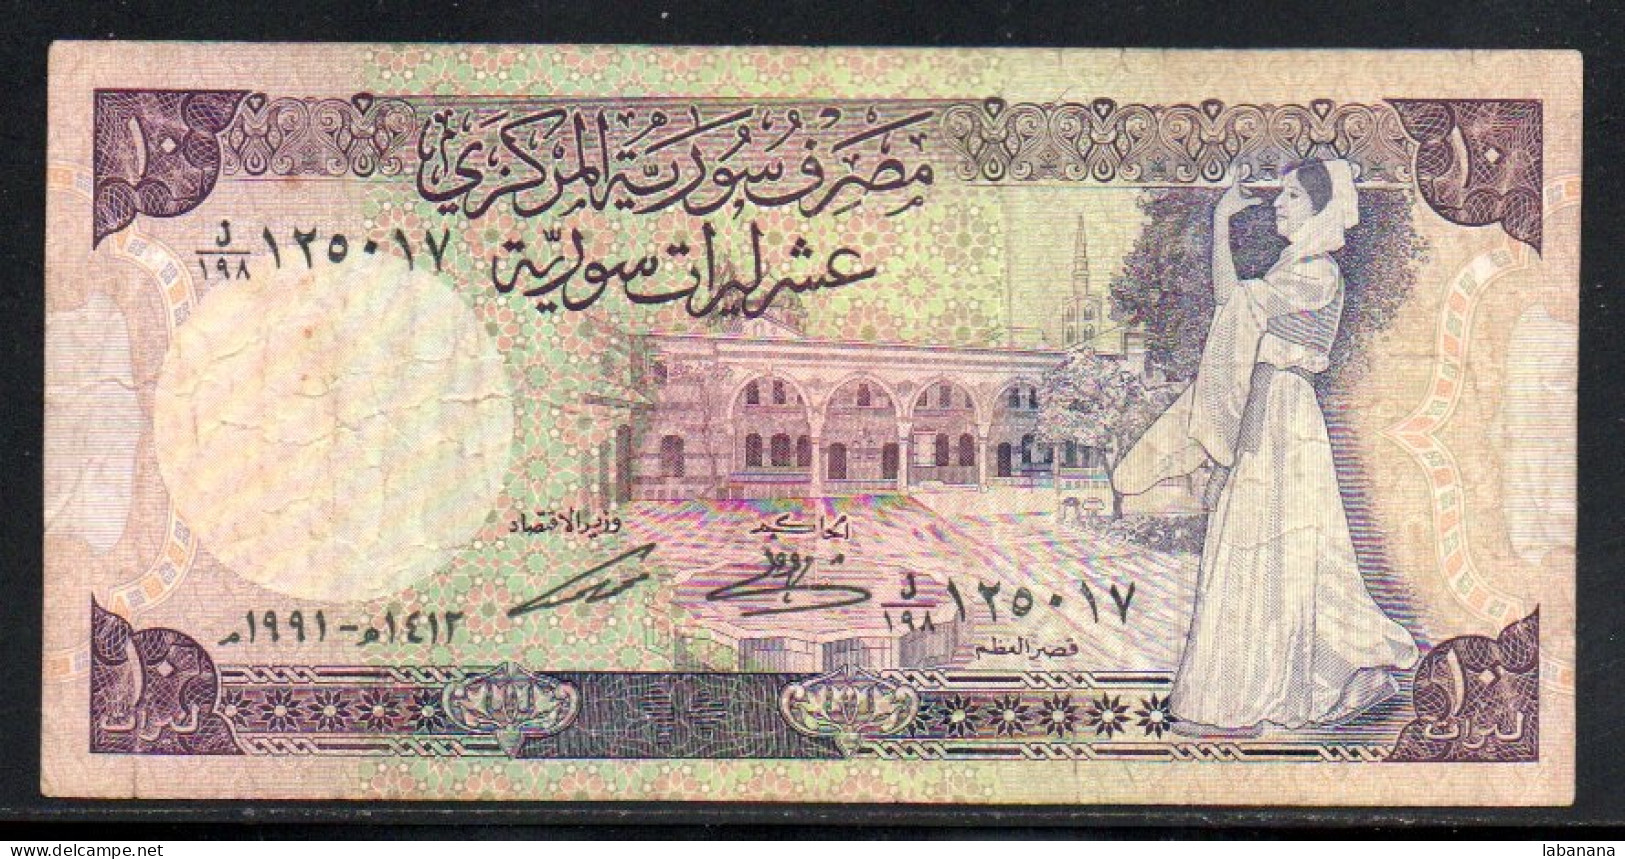 659-Syrie 10 Pounds 1991 - Syria